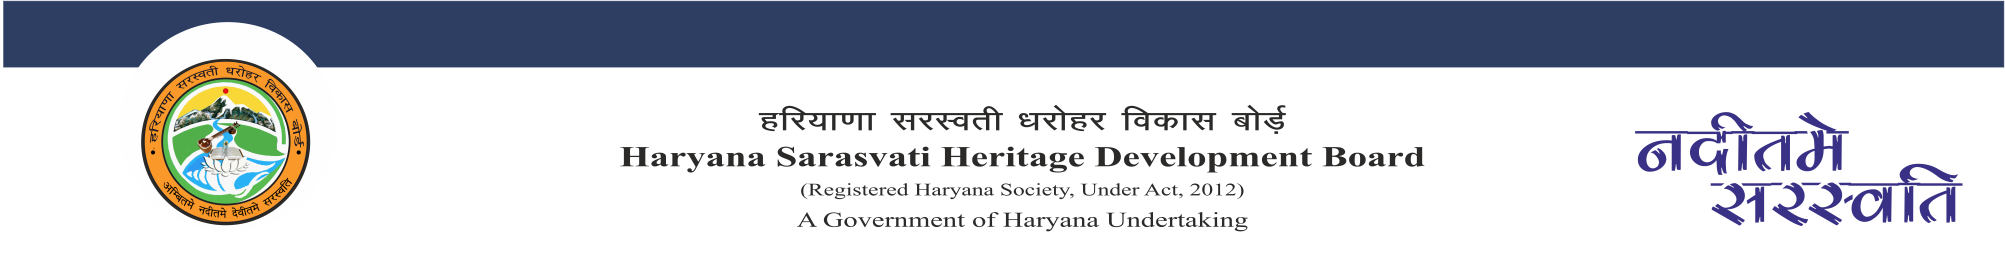 Haryana Sarasvati Heritage Development Board